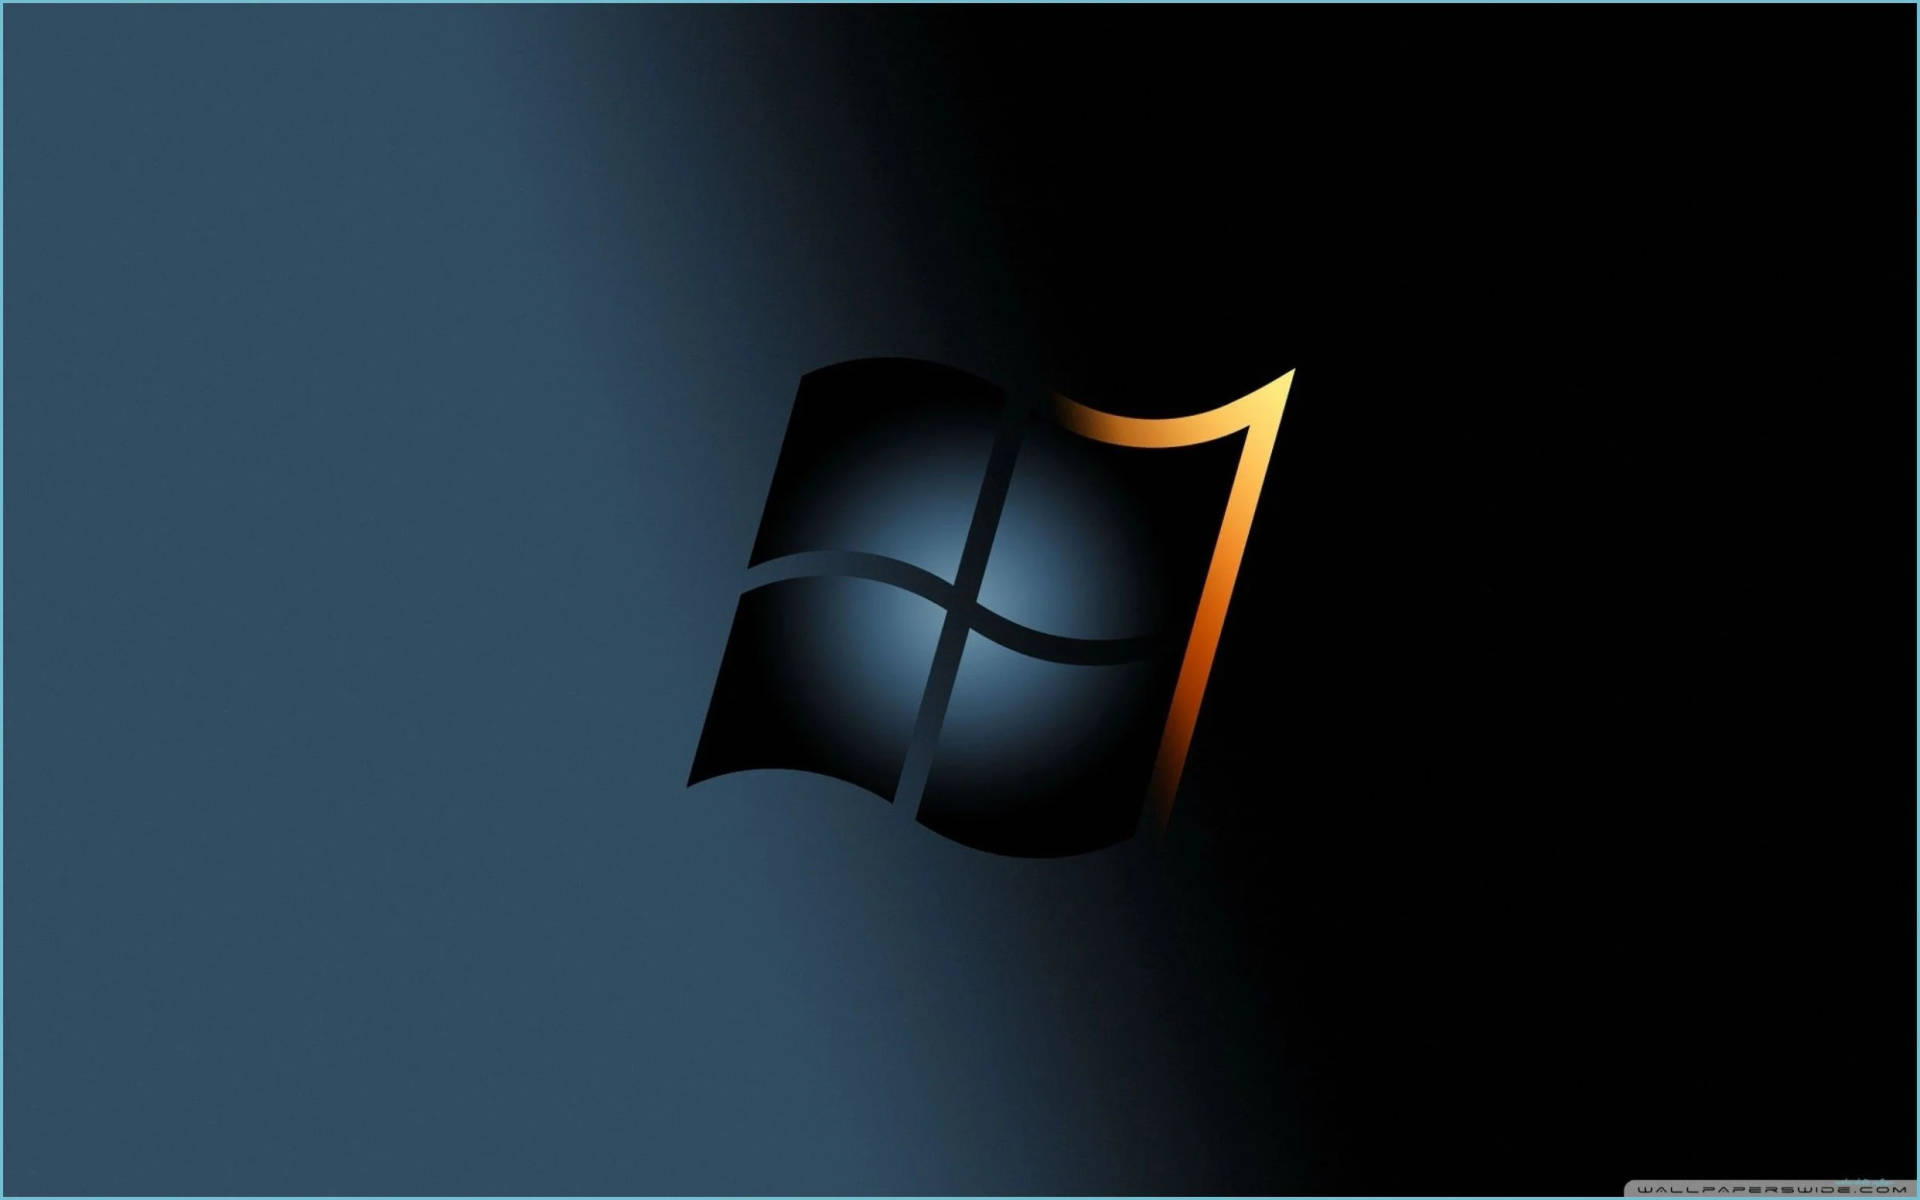 Free Windows 11 4k Wallpaper Downloads, [100+] Windows 11 4k Wallpapers for  FREE 